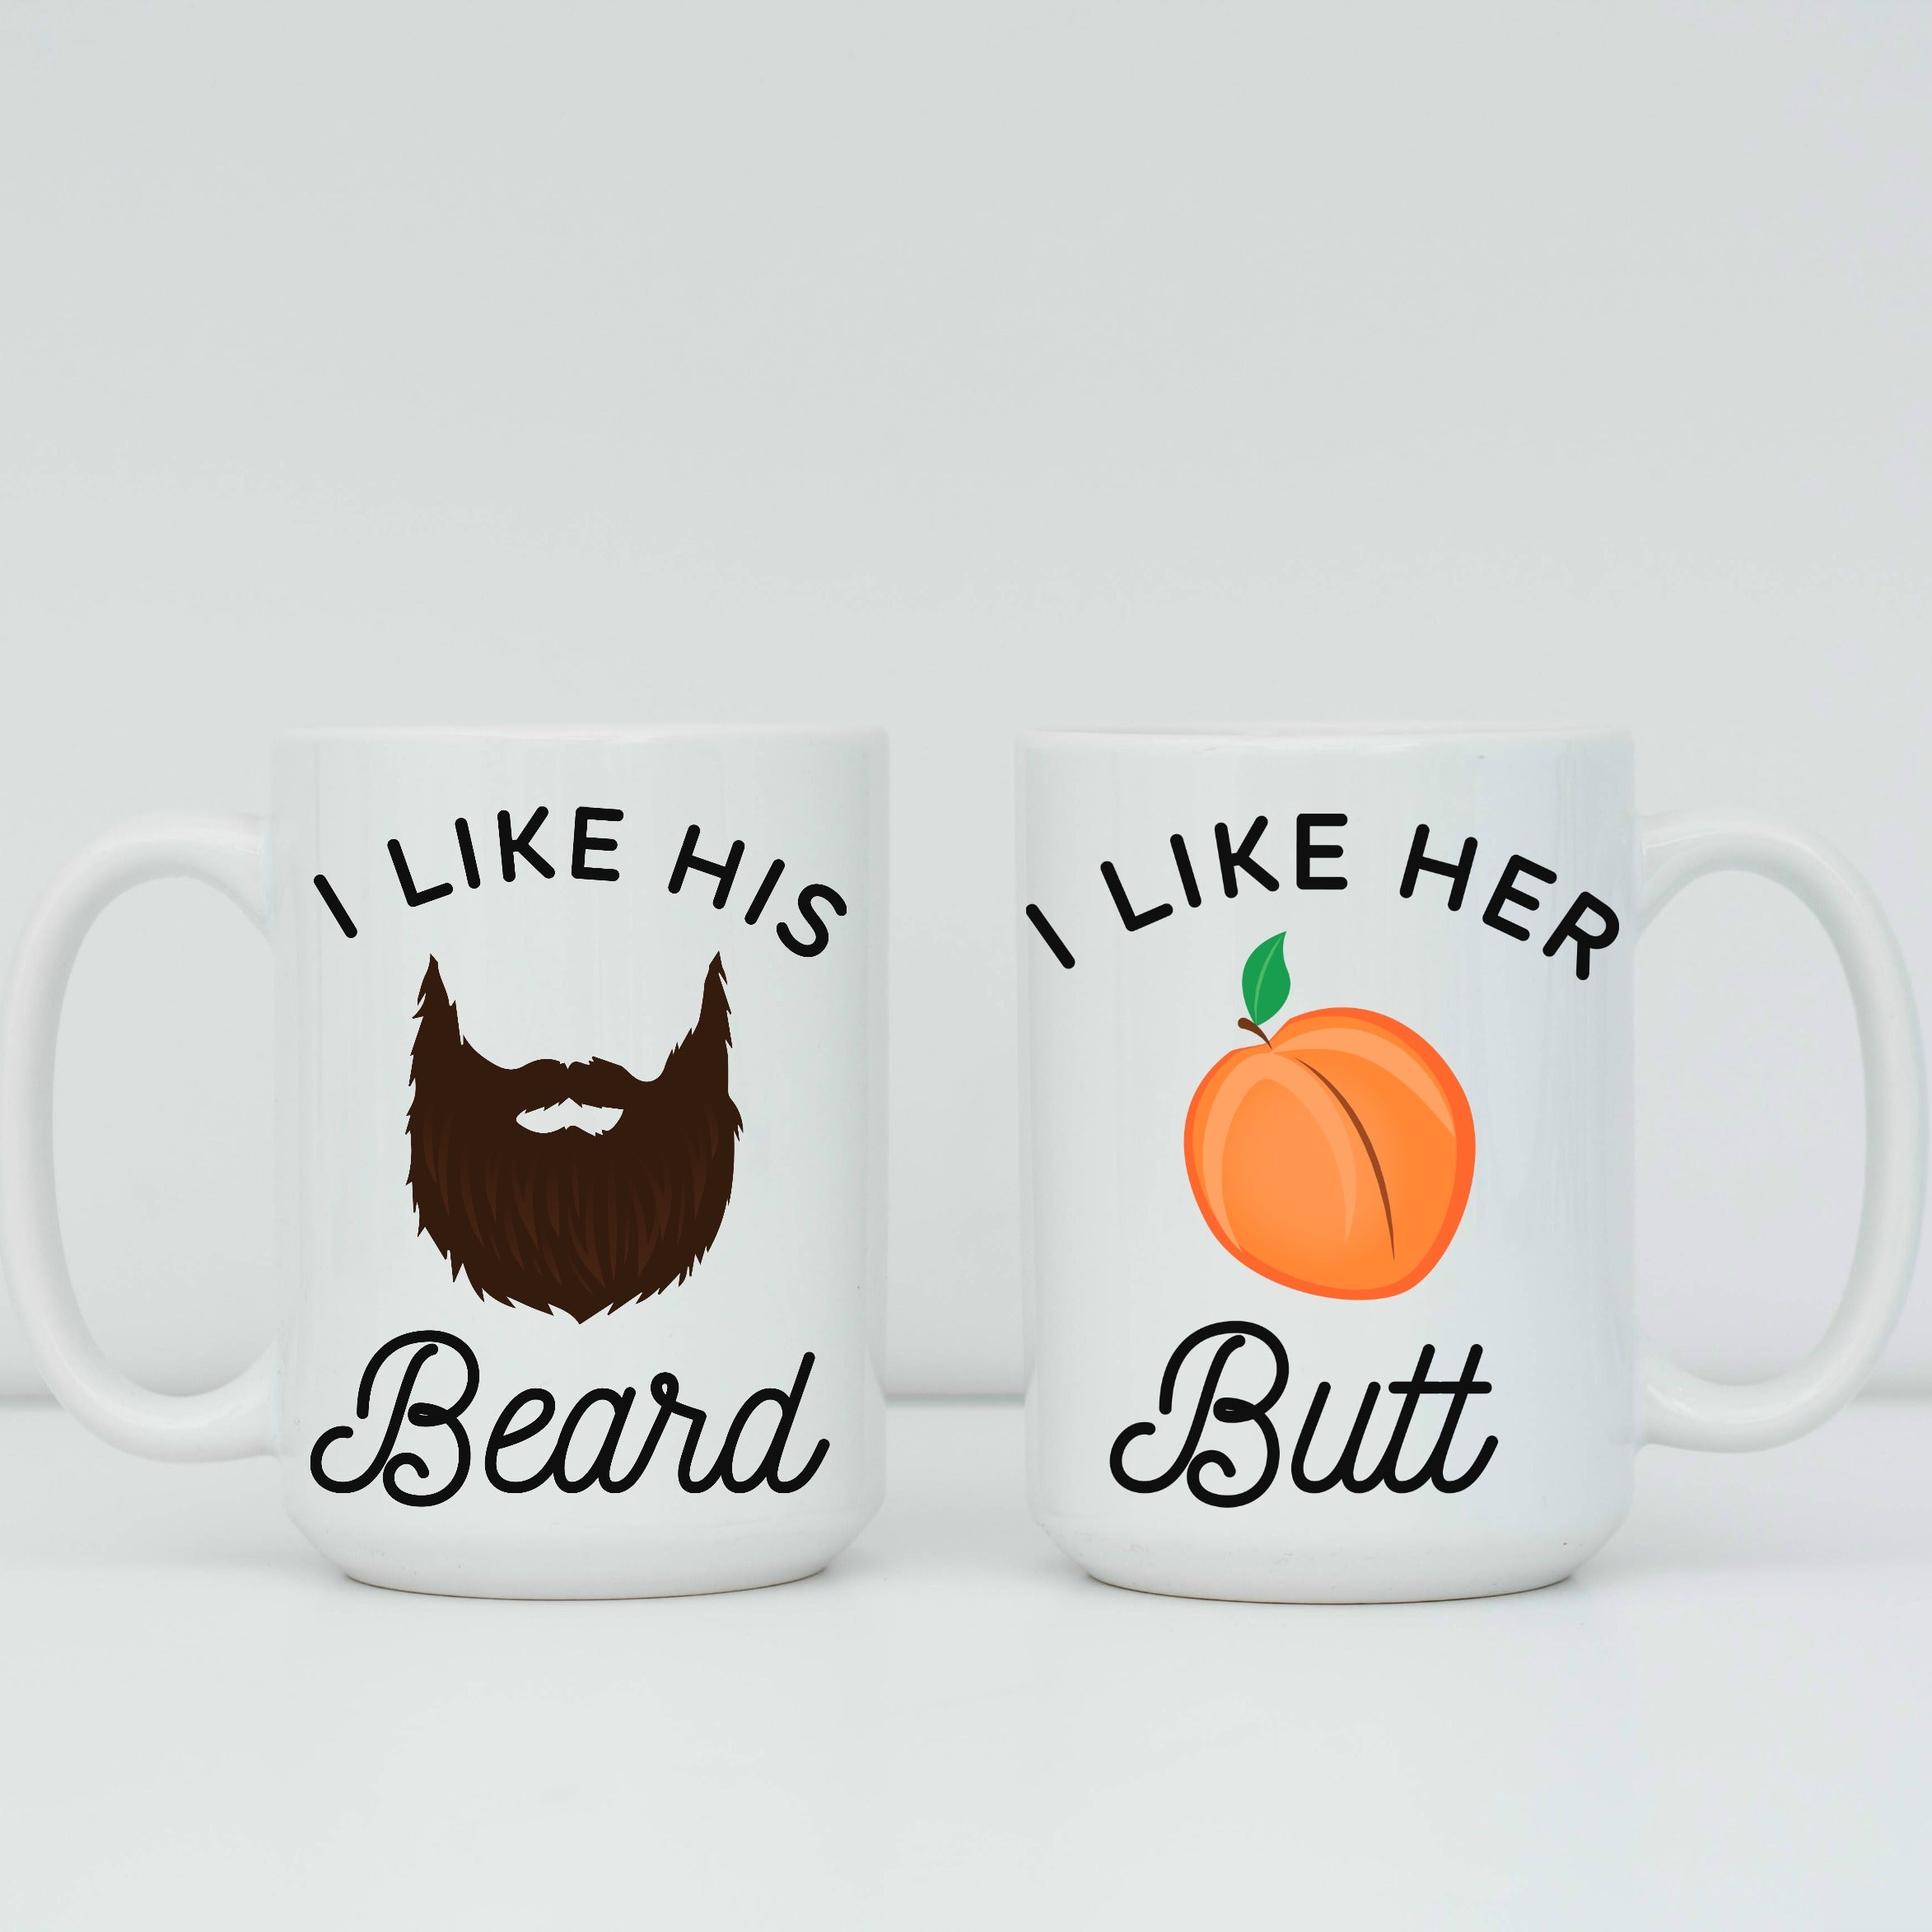 Mr and Mrs Gifts Coffee Mugs - I Like His Beard, I Like Her Btt